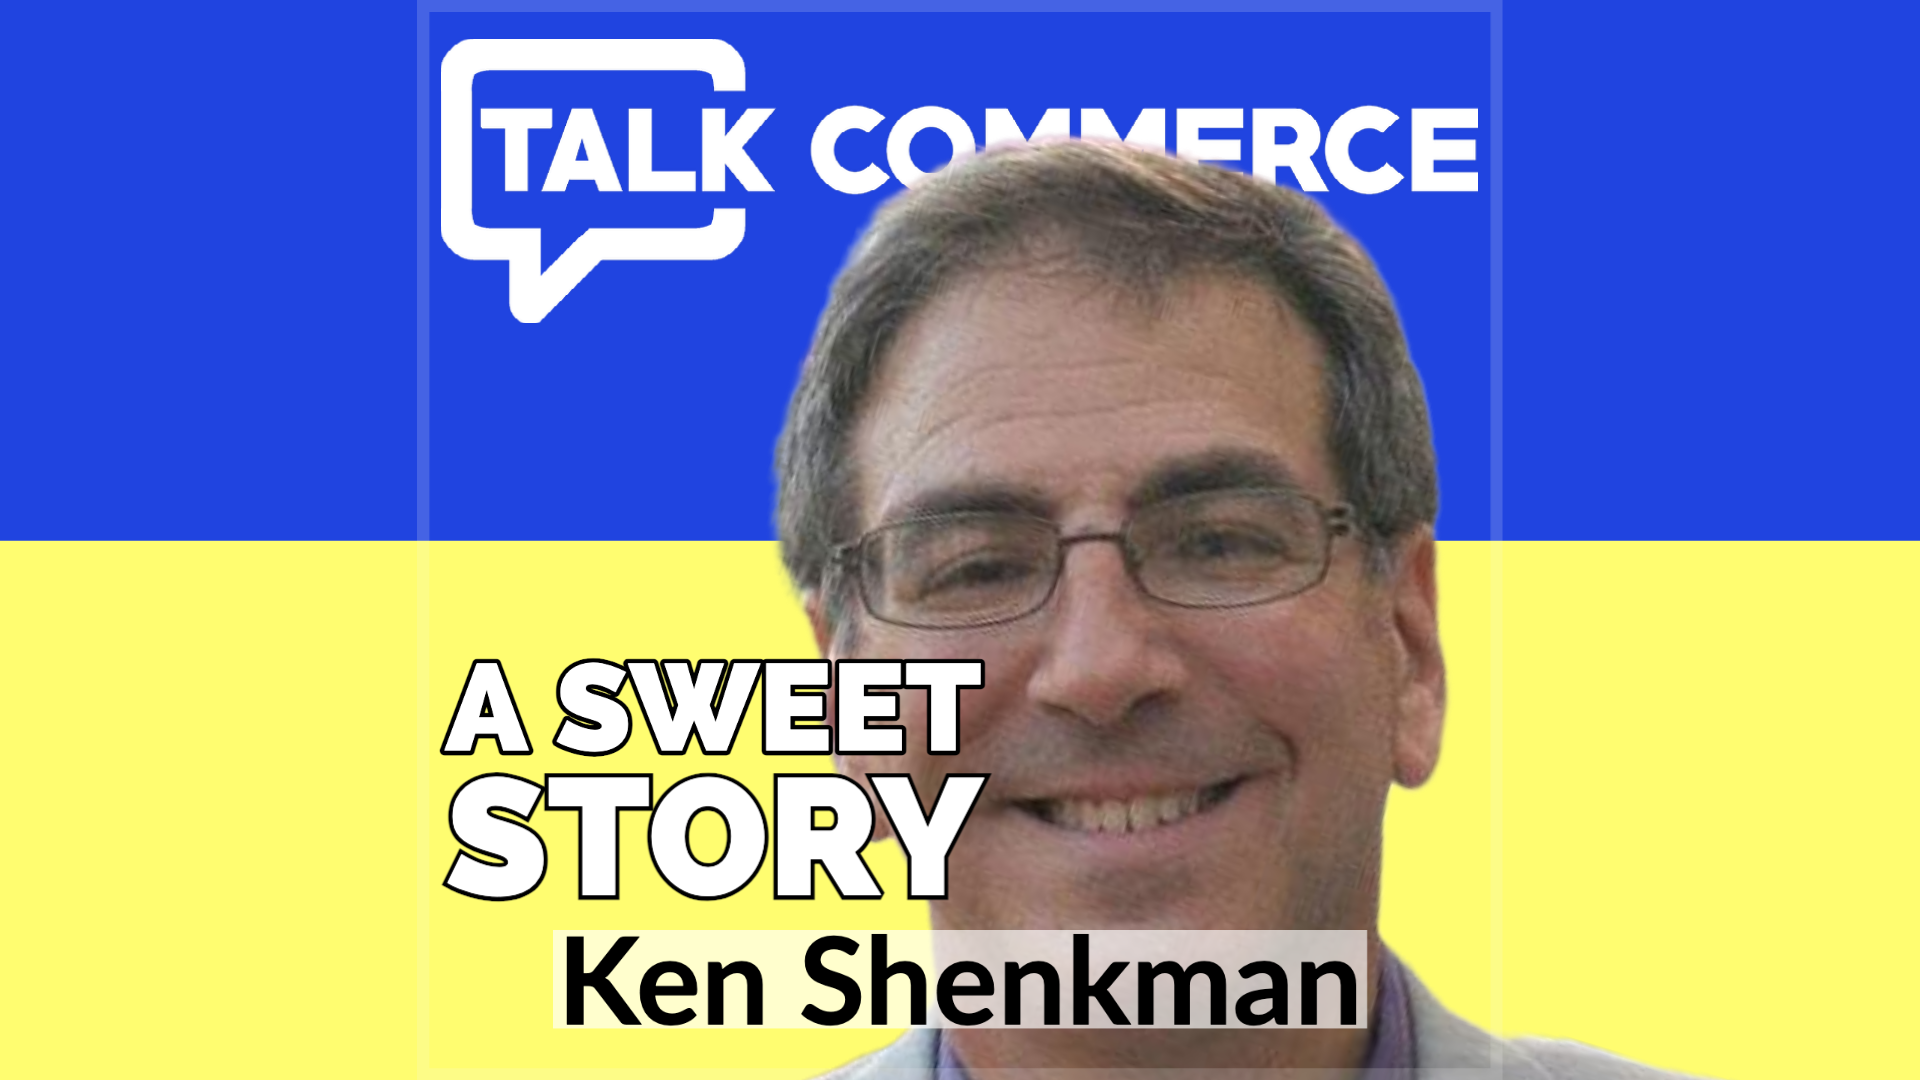 Talk-Commerce Ken Shenkman